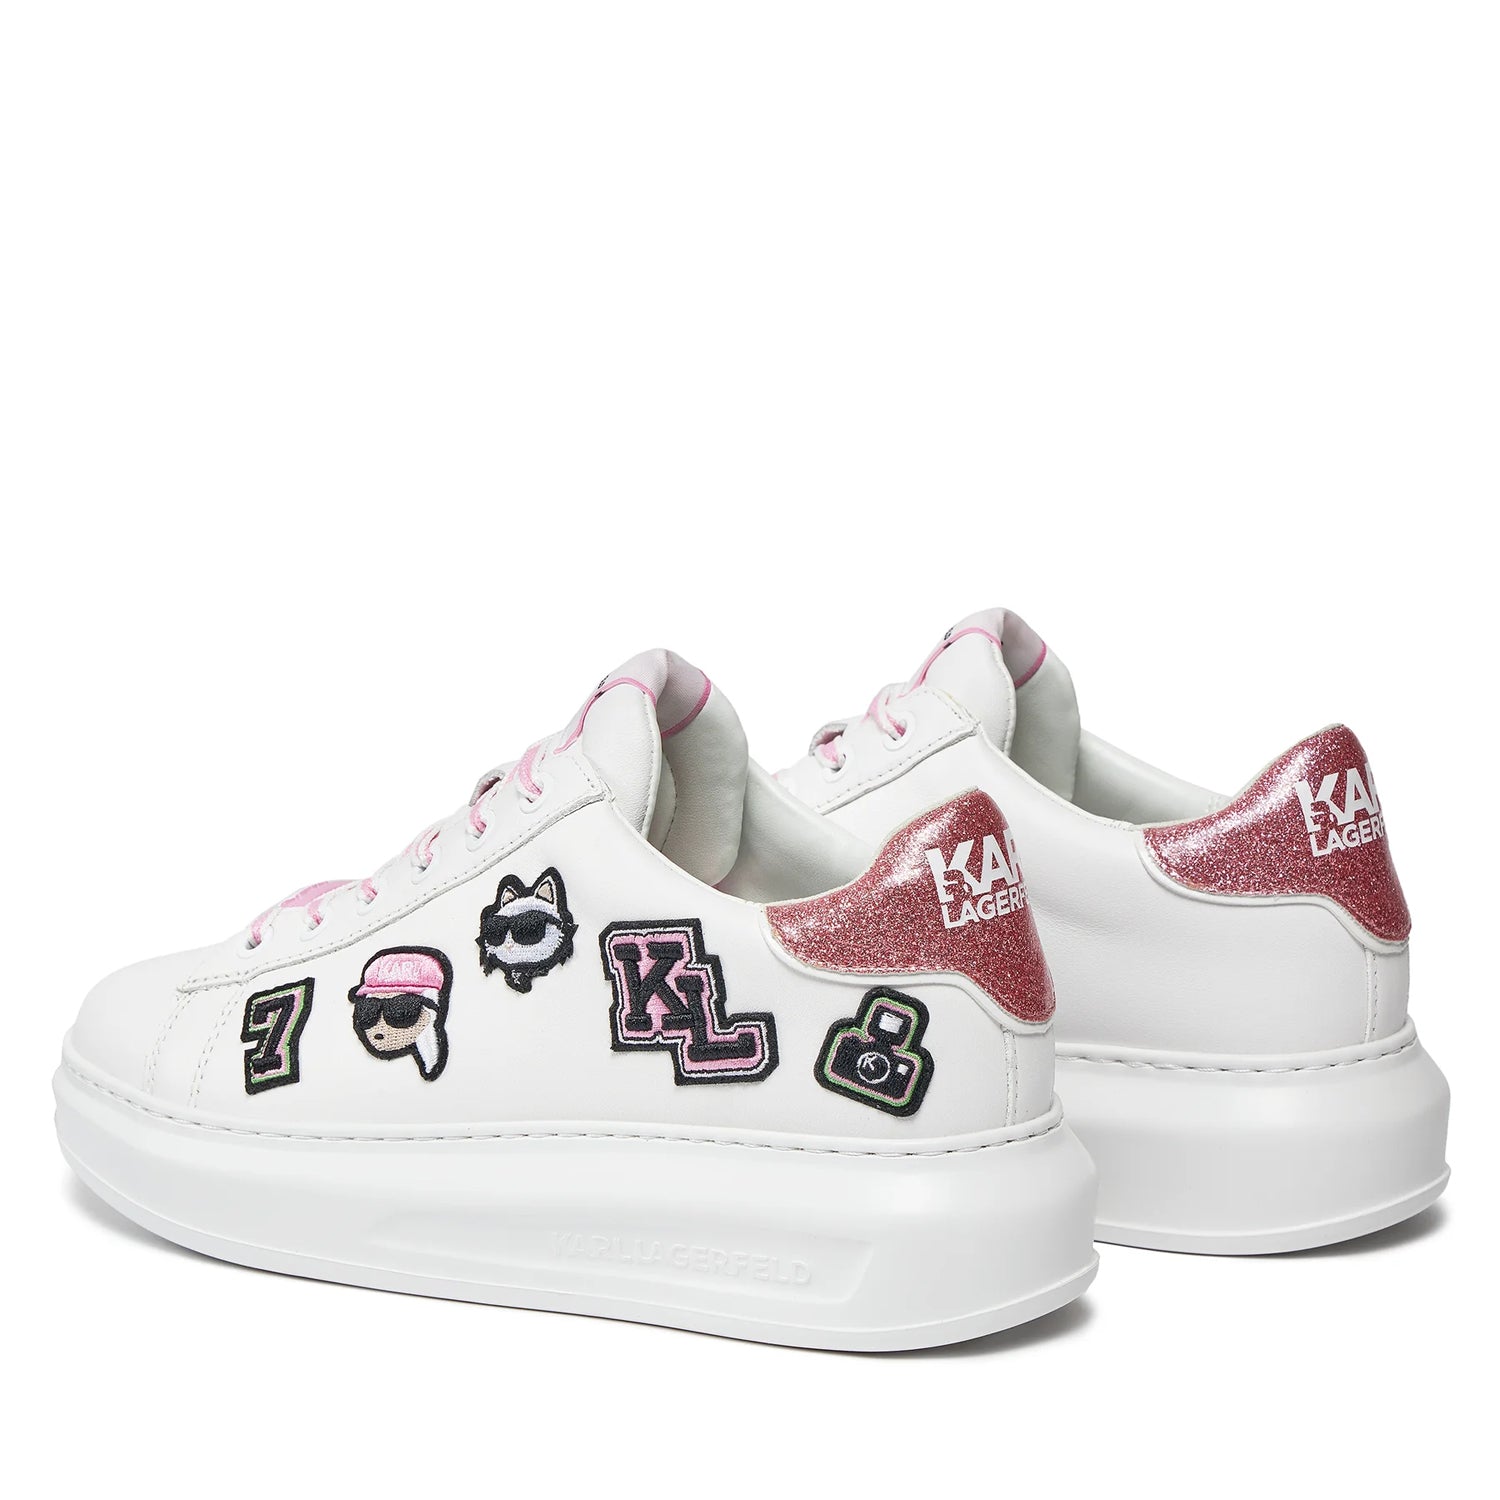 Karl Lagerfeld Sapatilhas Sneakers Shoes Kl62574 Whi Pink Branco Rosa_shot2